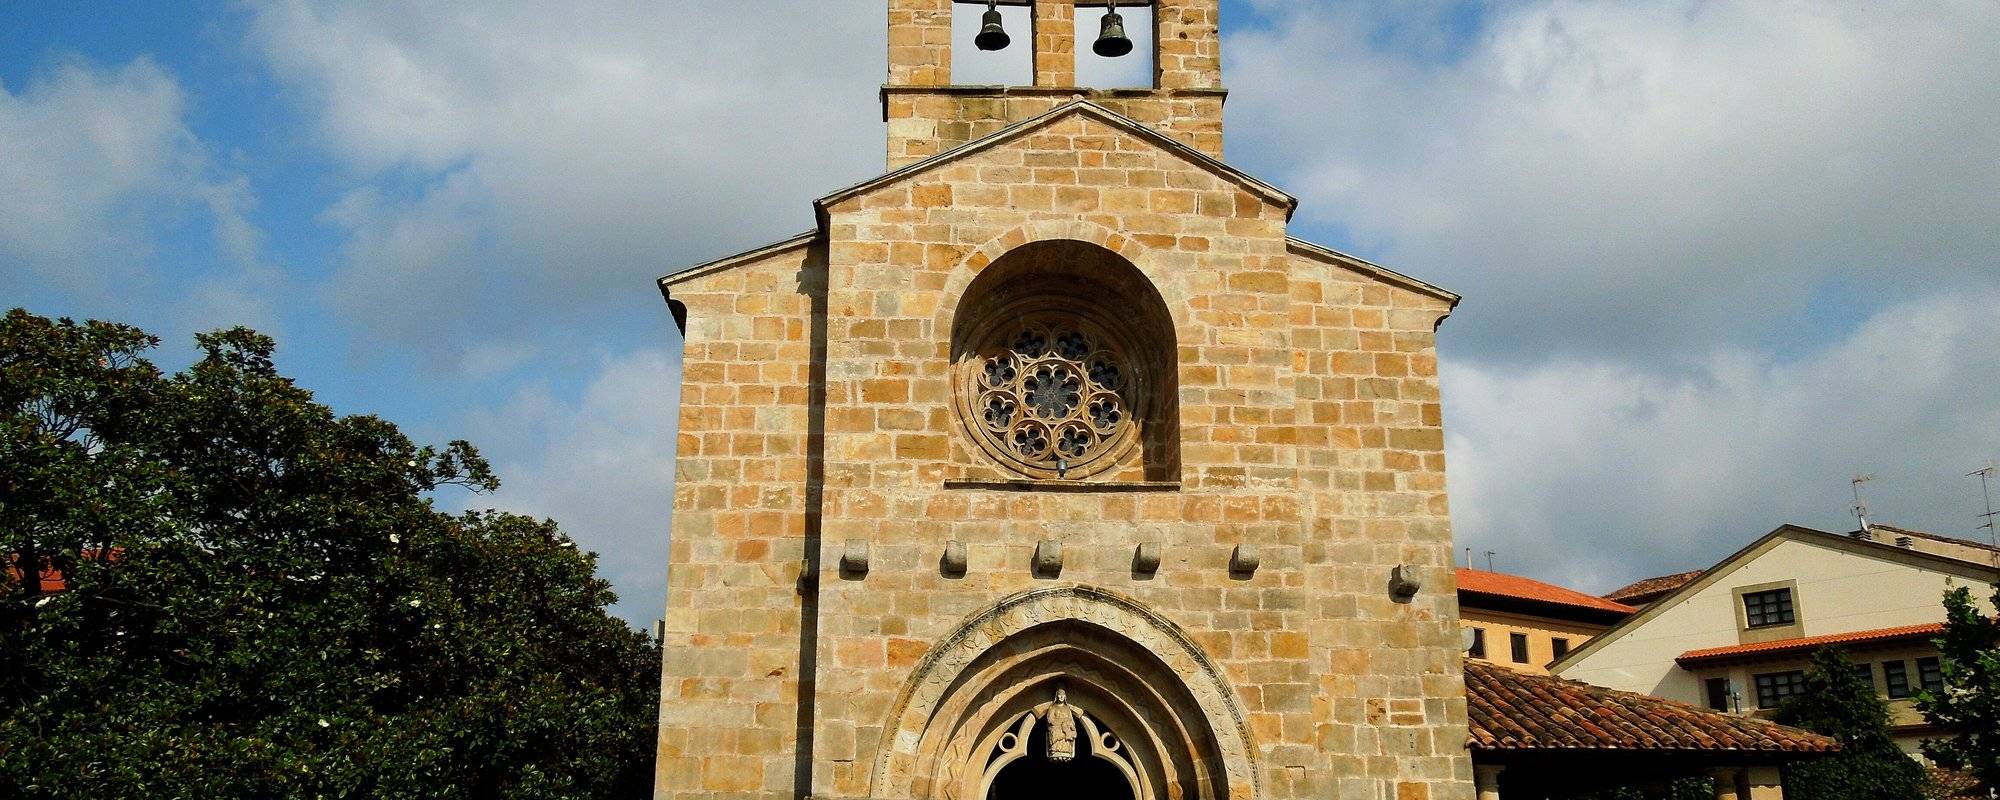 Art, Travel and Culture: Templar Knights in Villaviciosa, Asturias